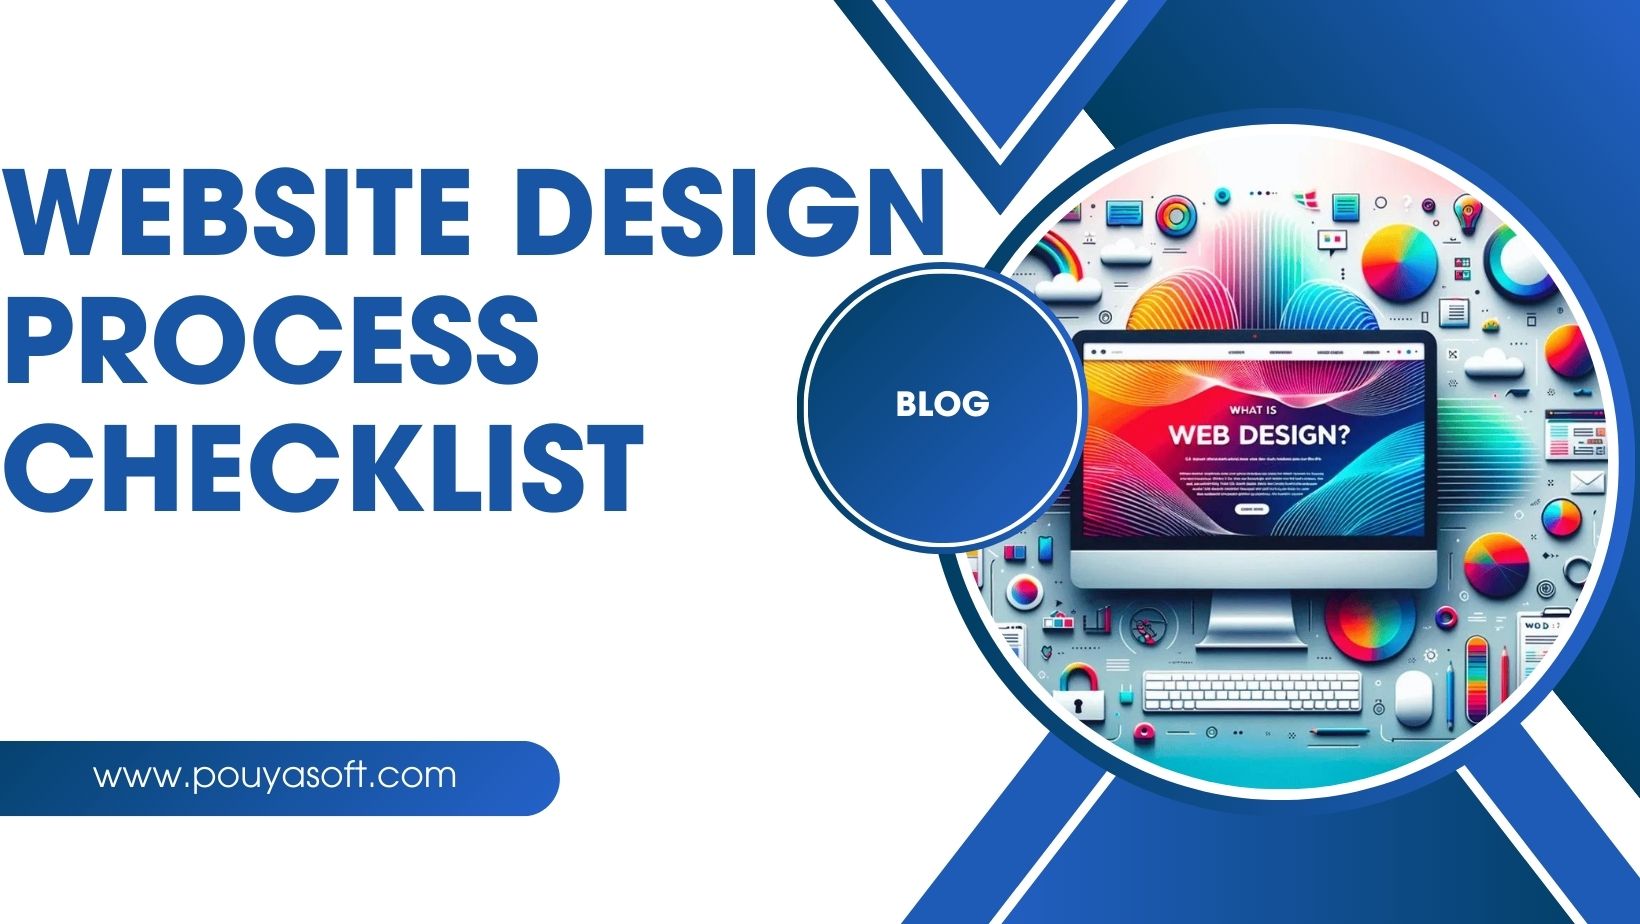 website design process checklist [9 step] - pouyasoft